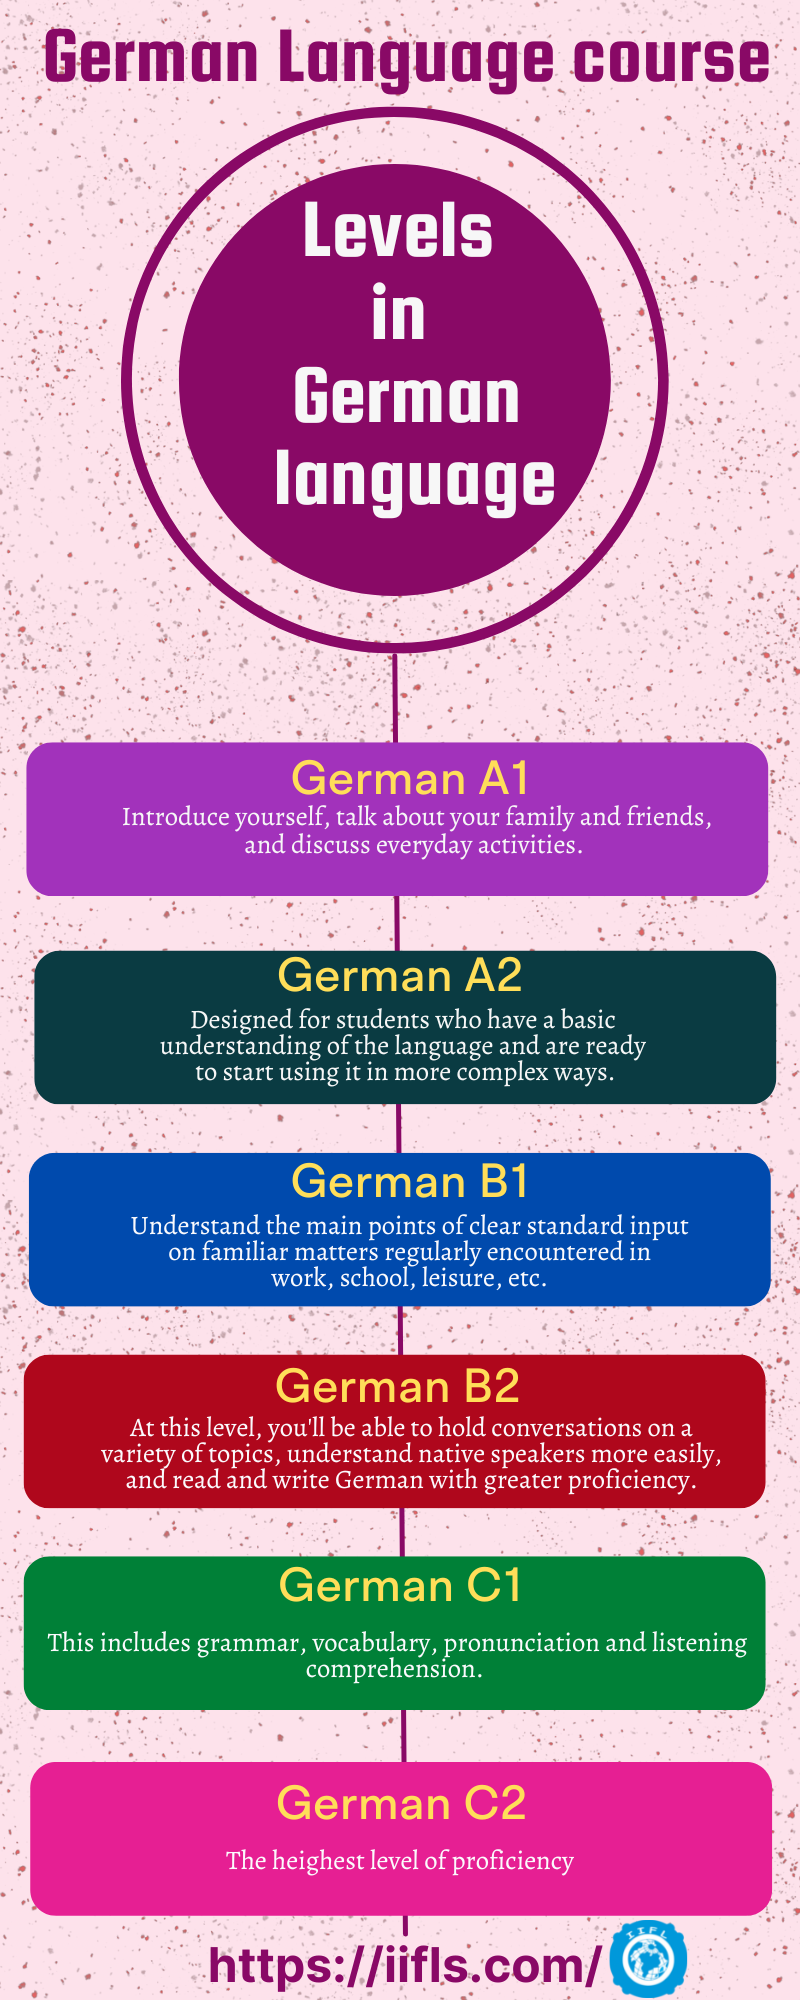 Levels in German Language